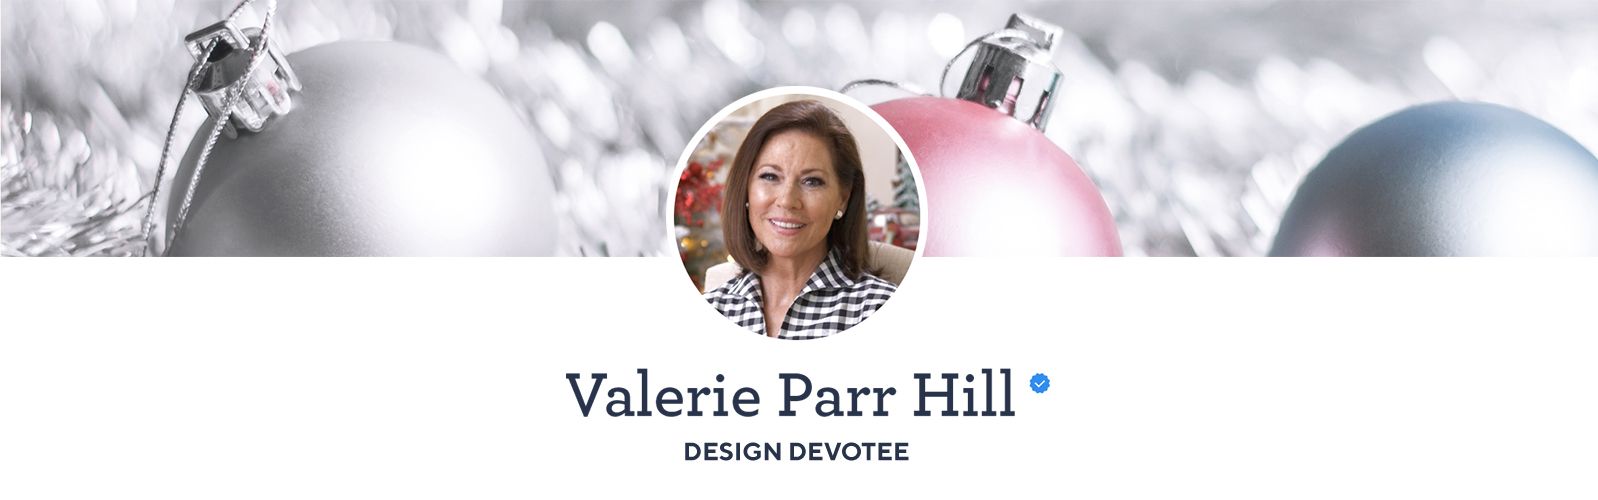 Valerie Parr Hill - Design Devotee